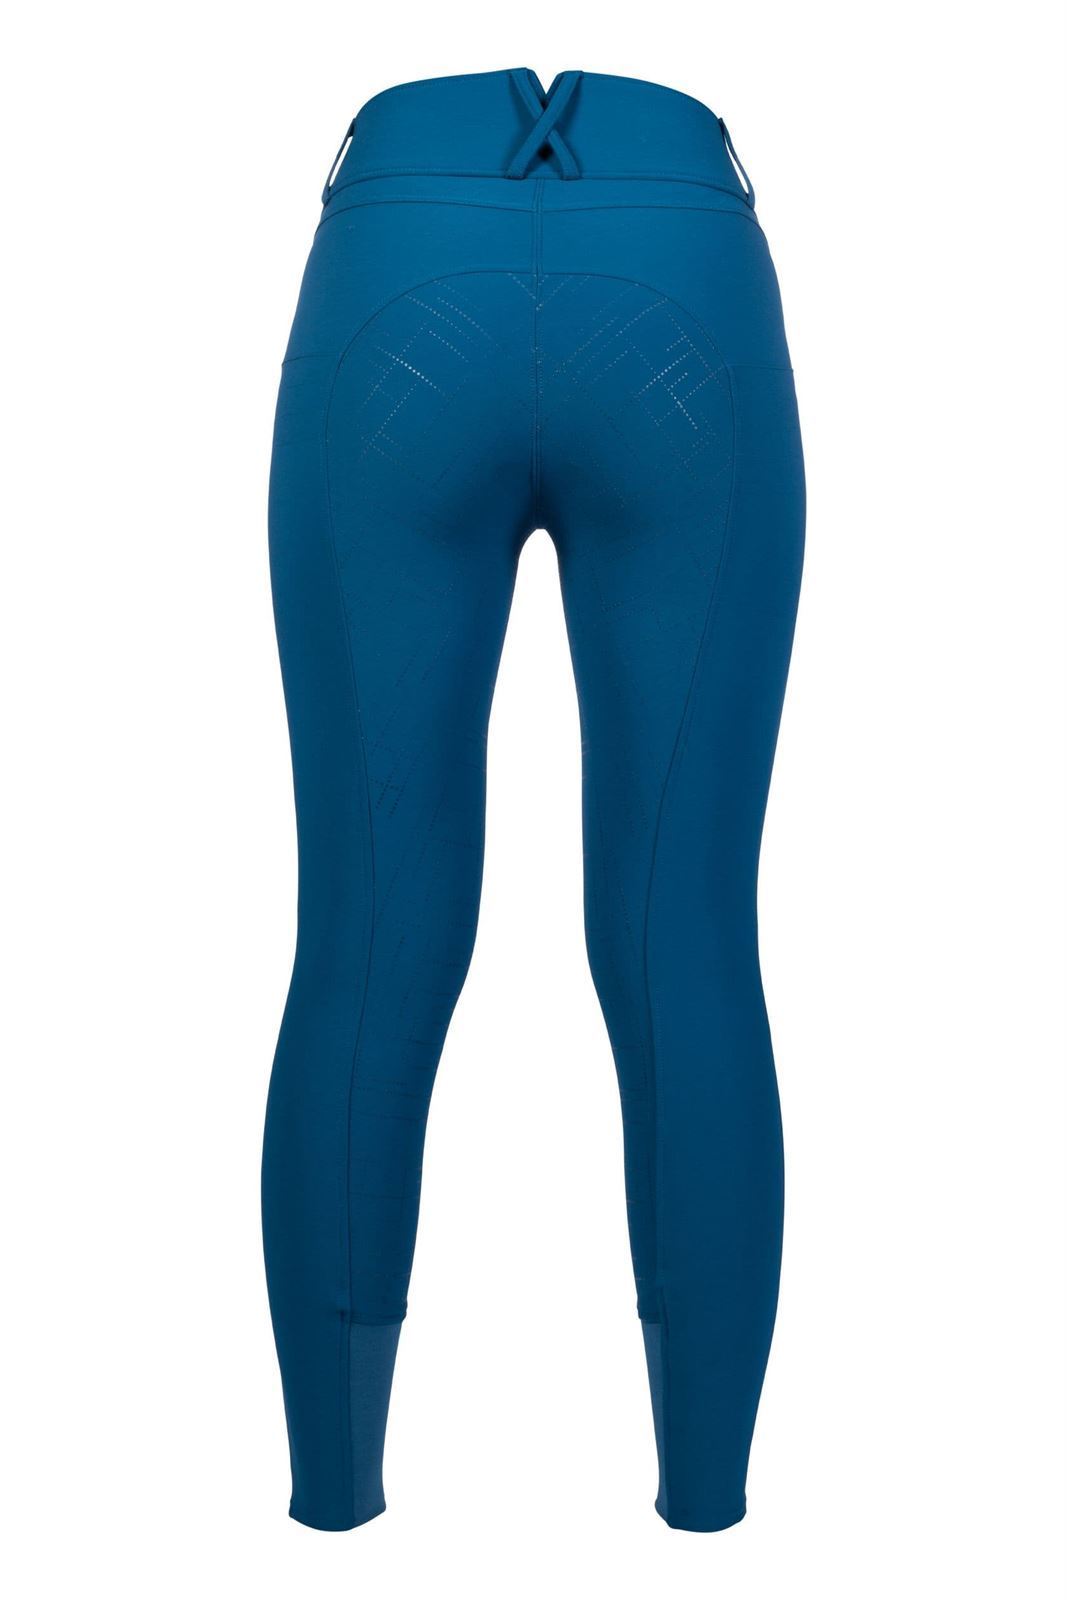 Pantalón mujer HKM Sports Equipment Port royal azul culera grip tejido grueso termoaislante - Imagen 2